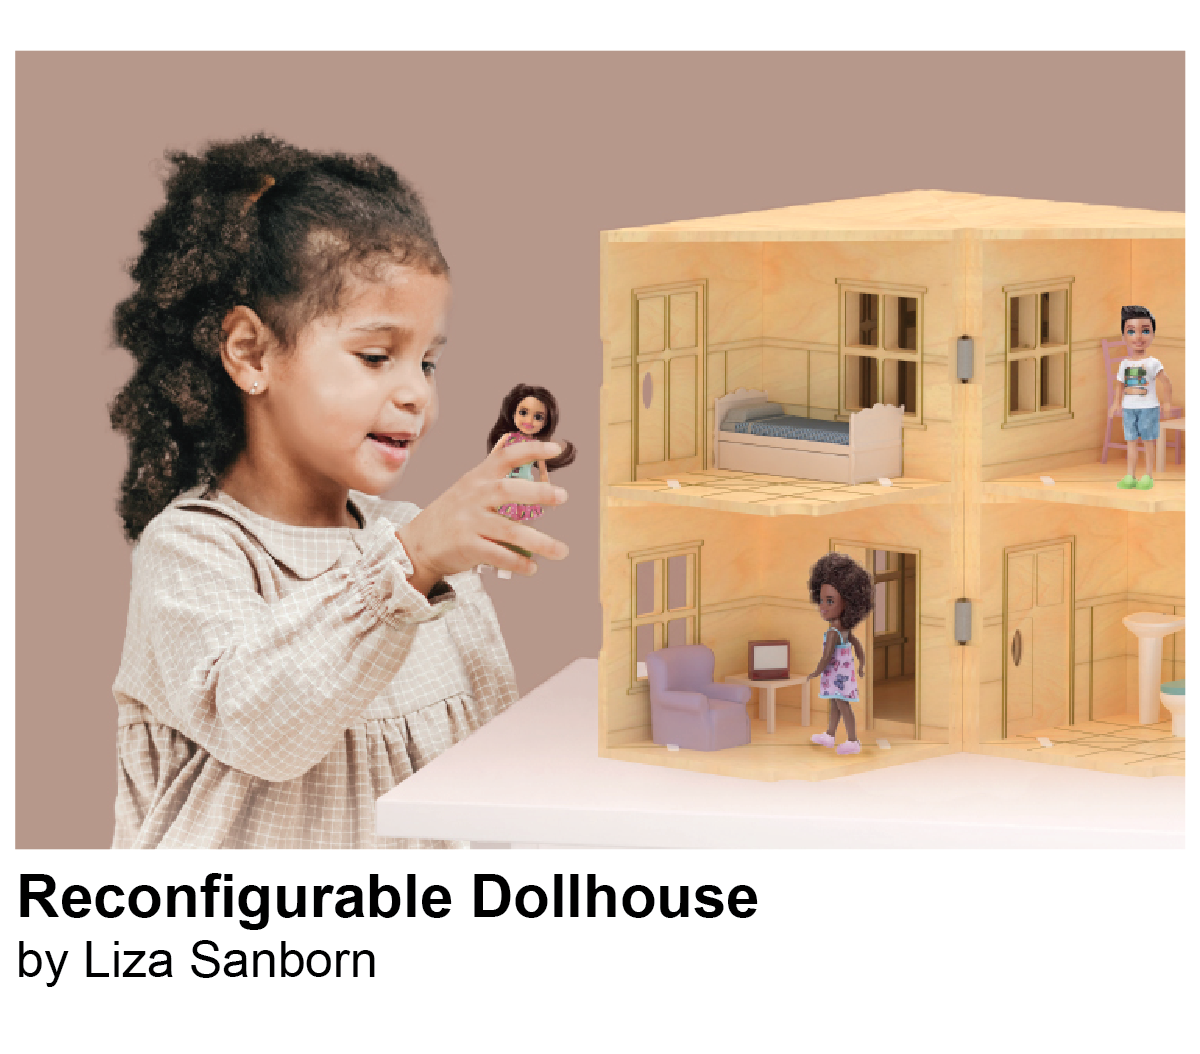 Reconfigurable Dollhouse by Liza Sanborn